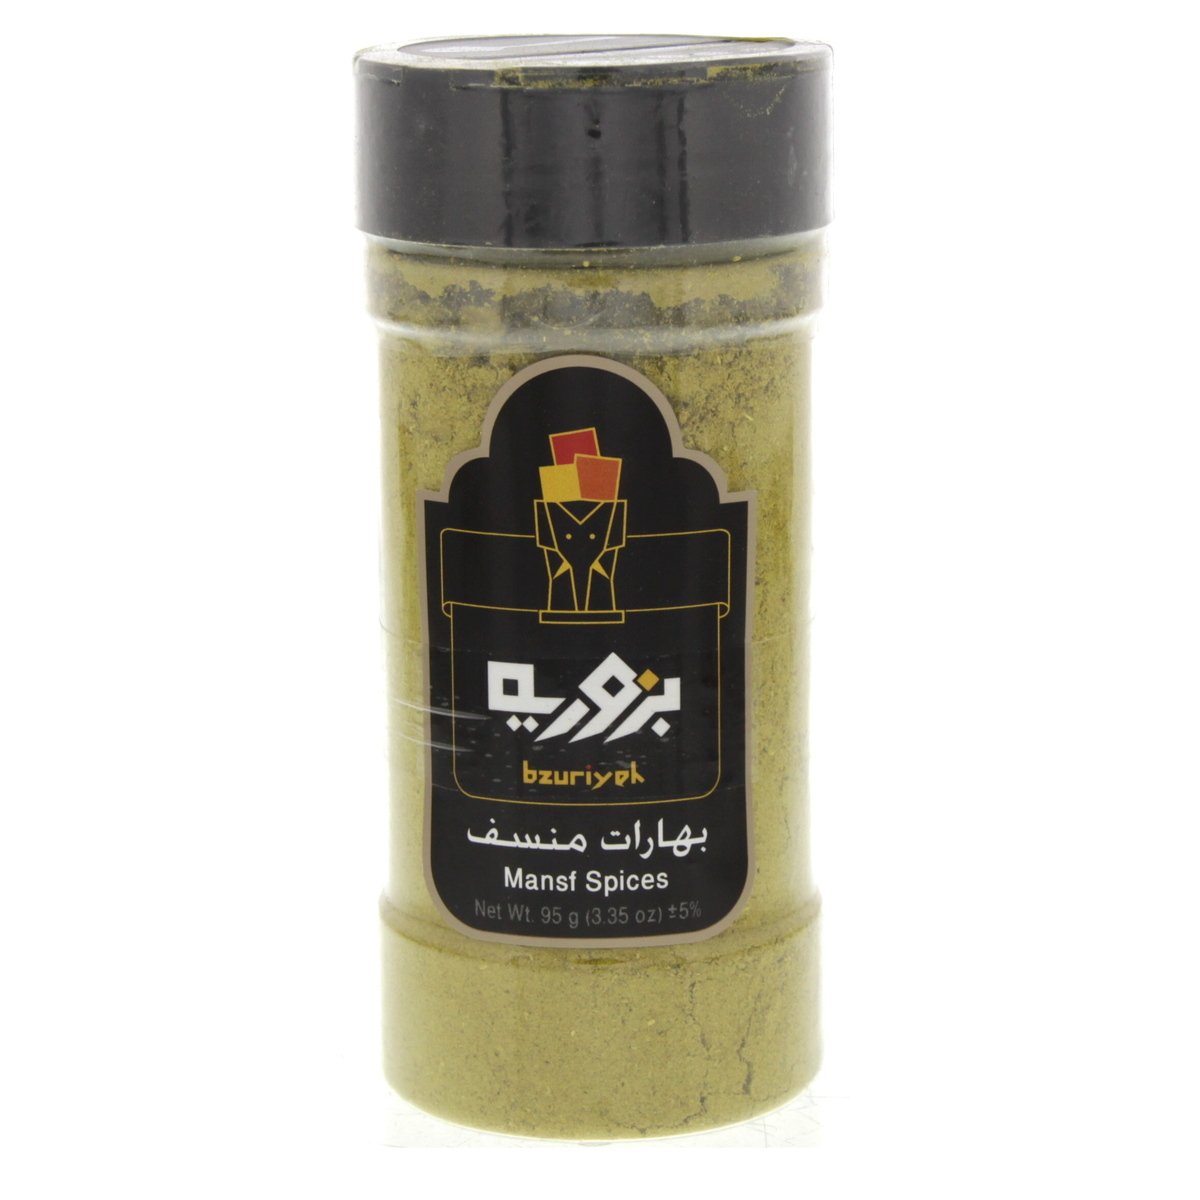 Bzuriyeh Mansf Spices 85 g